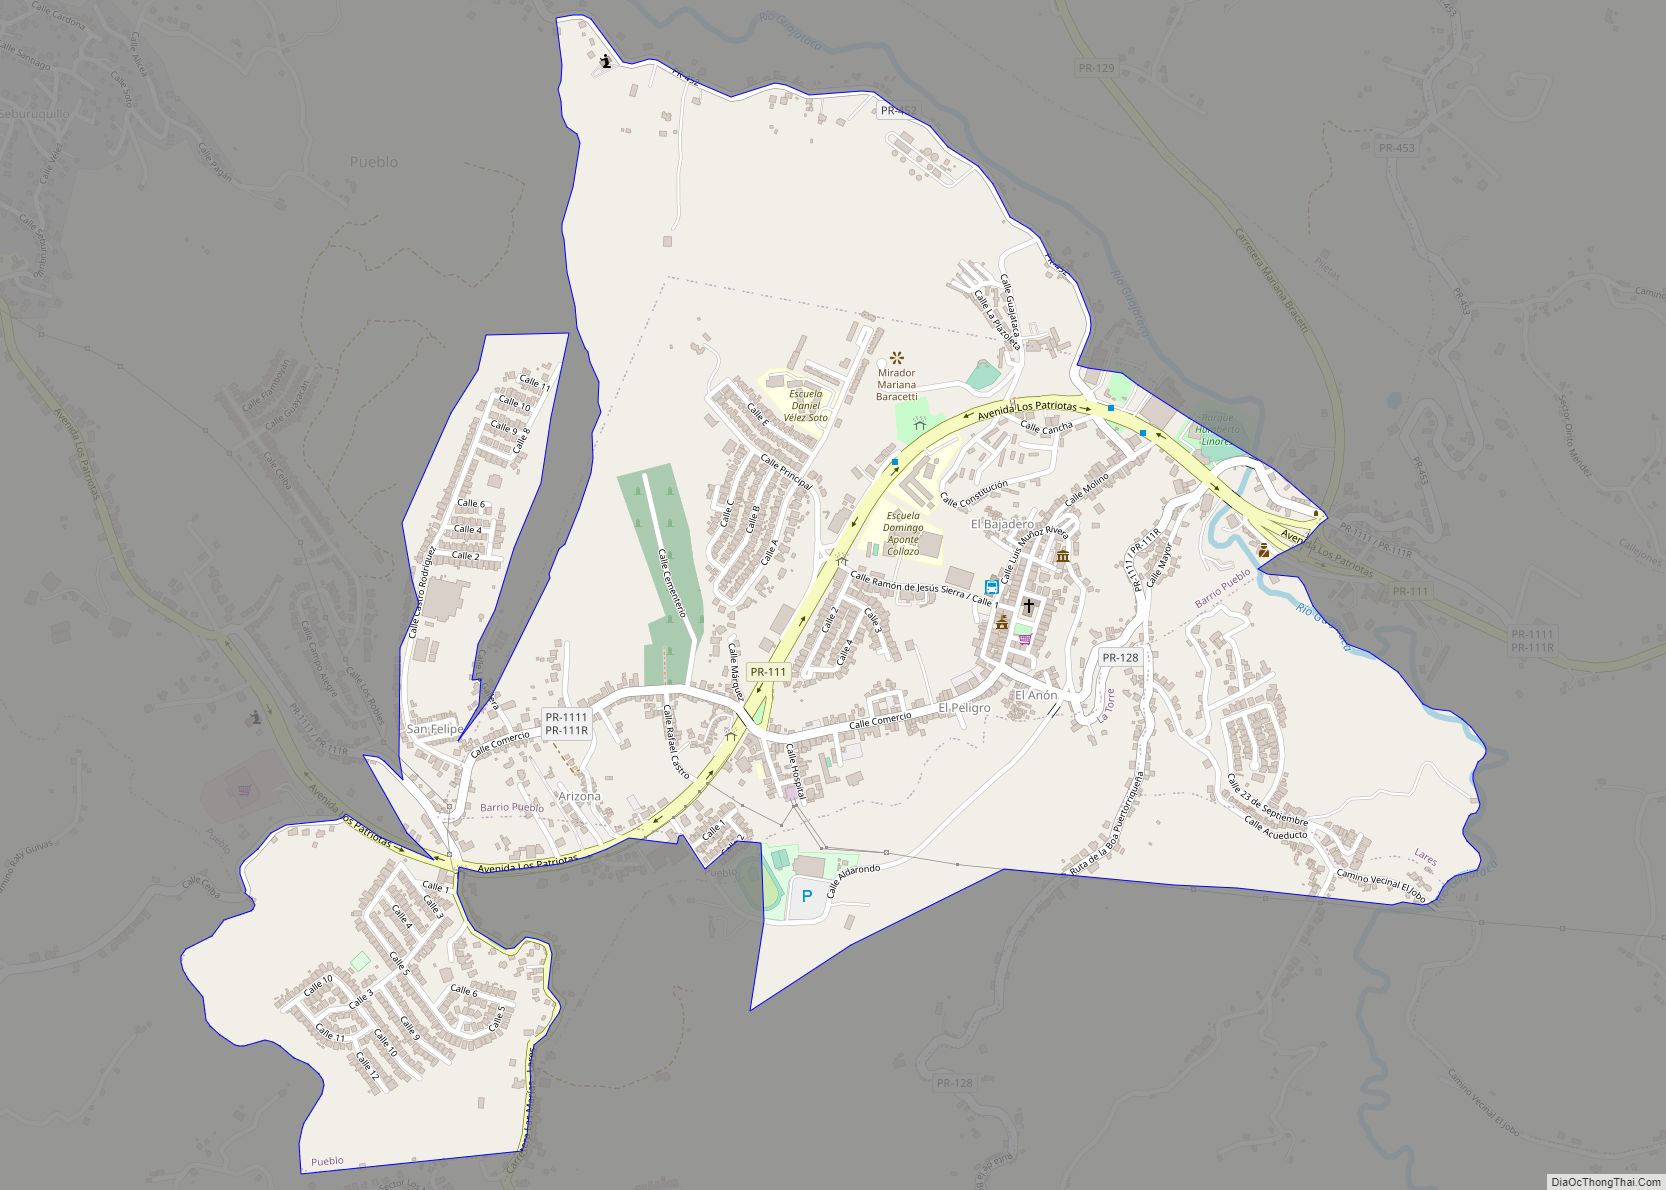 Map of Lares zona urbana